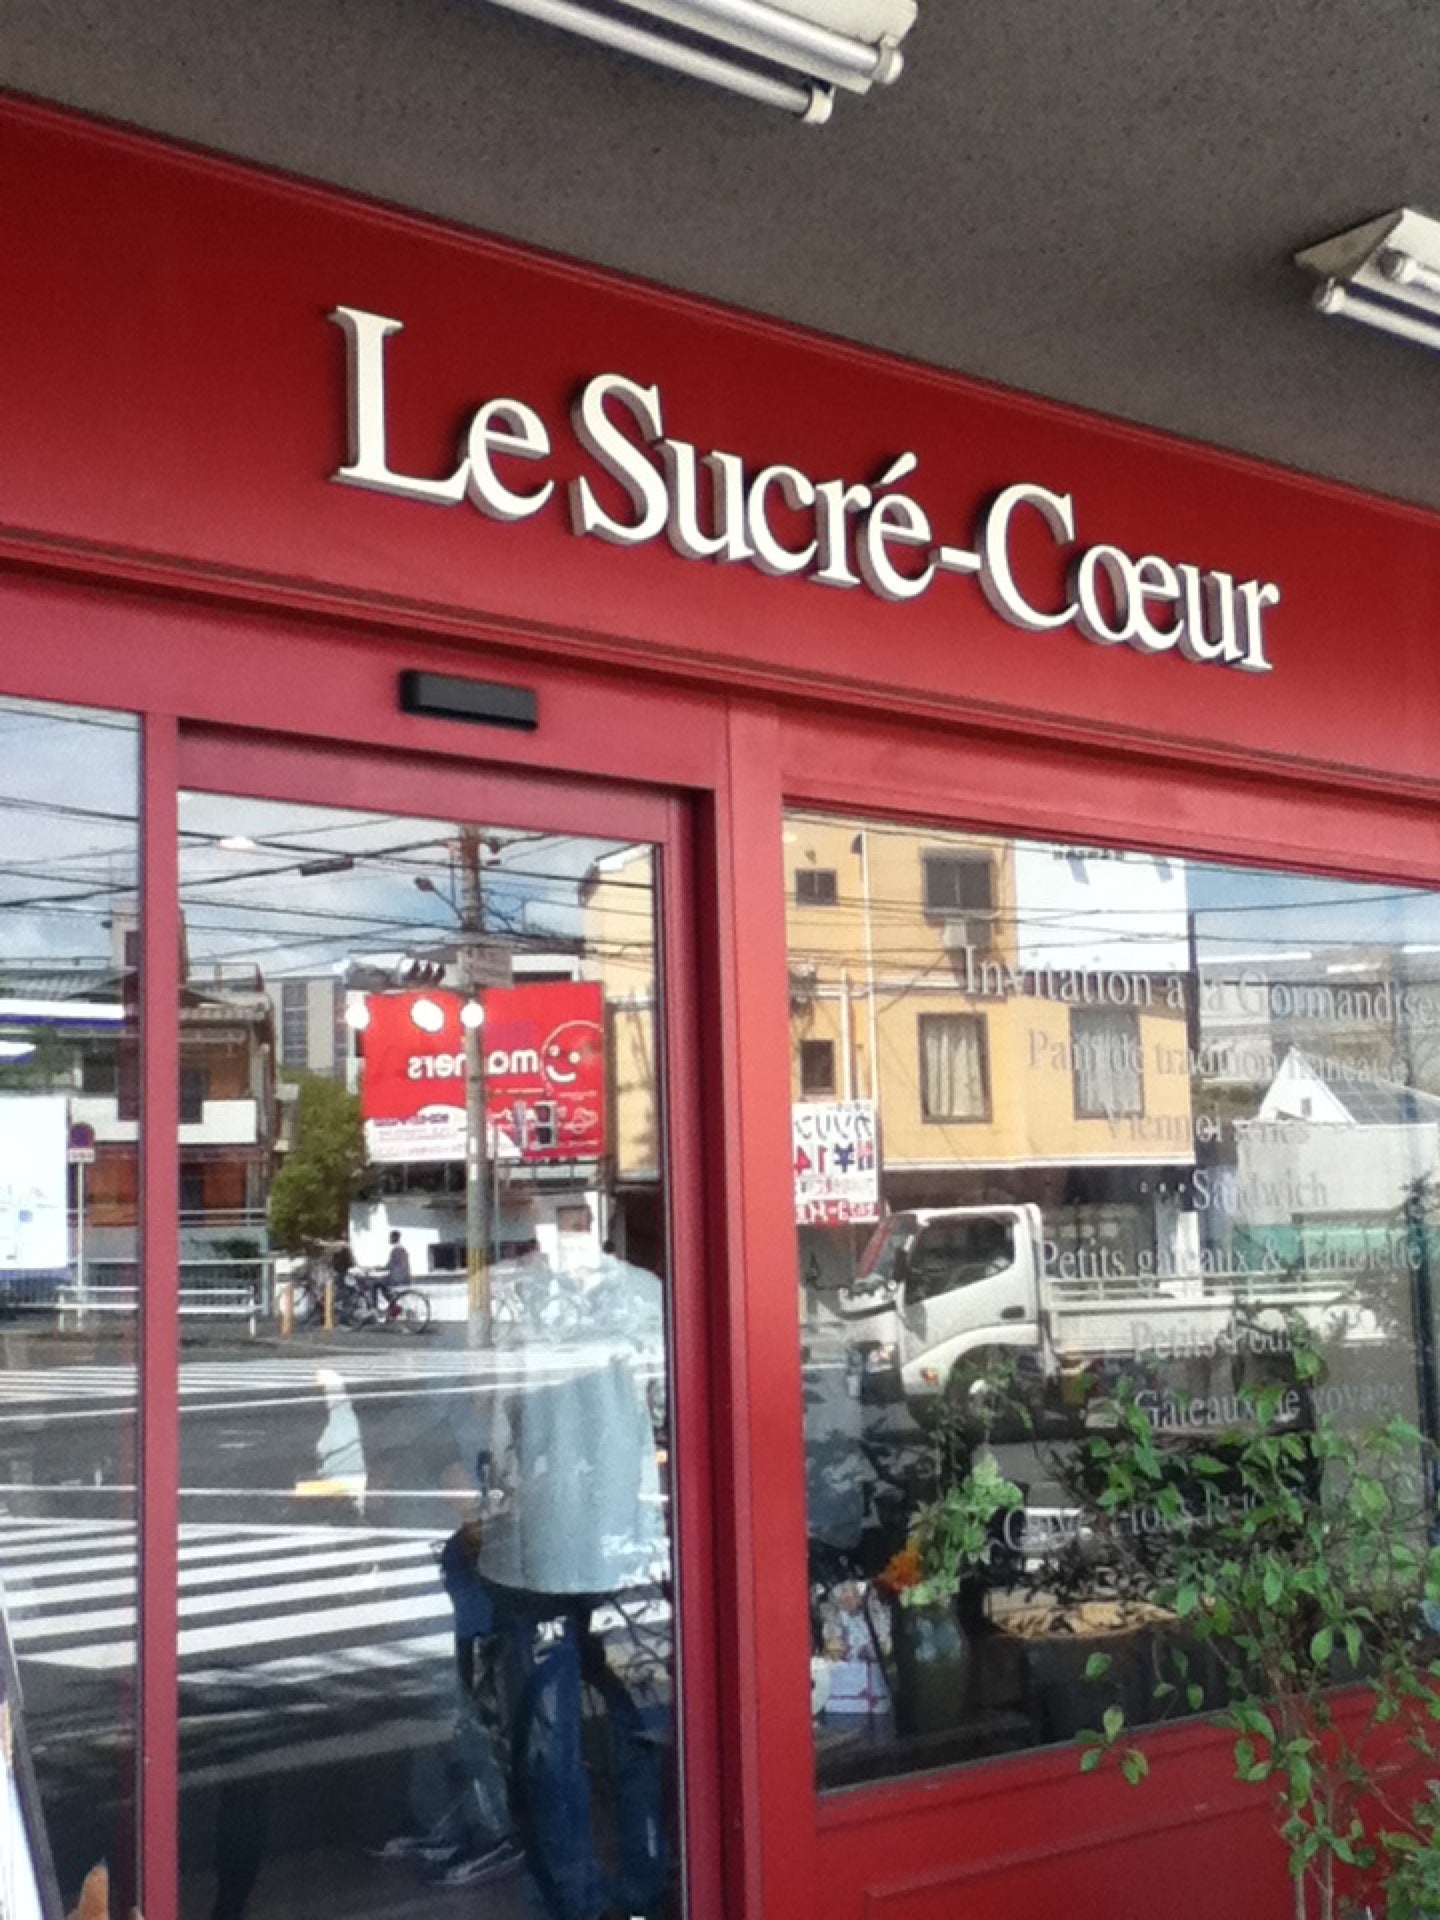 Le Sucre-Coeur (ル・シュクレ・クール)